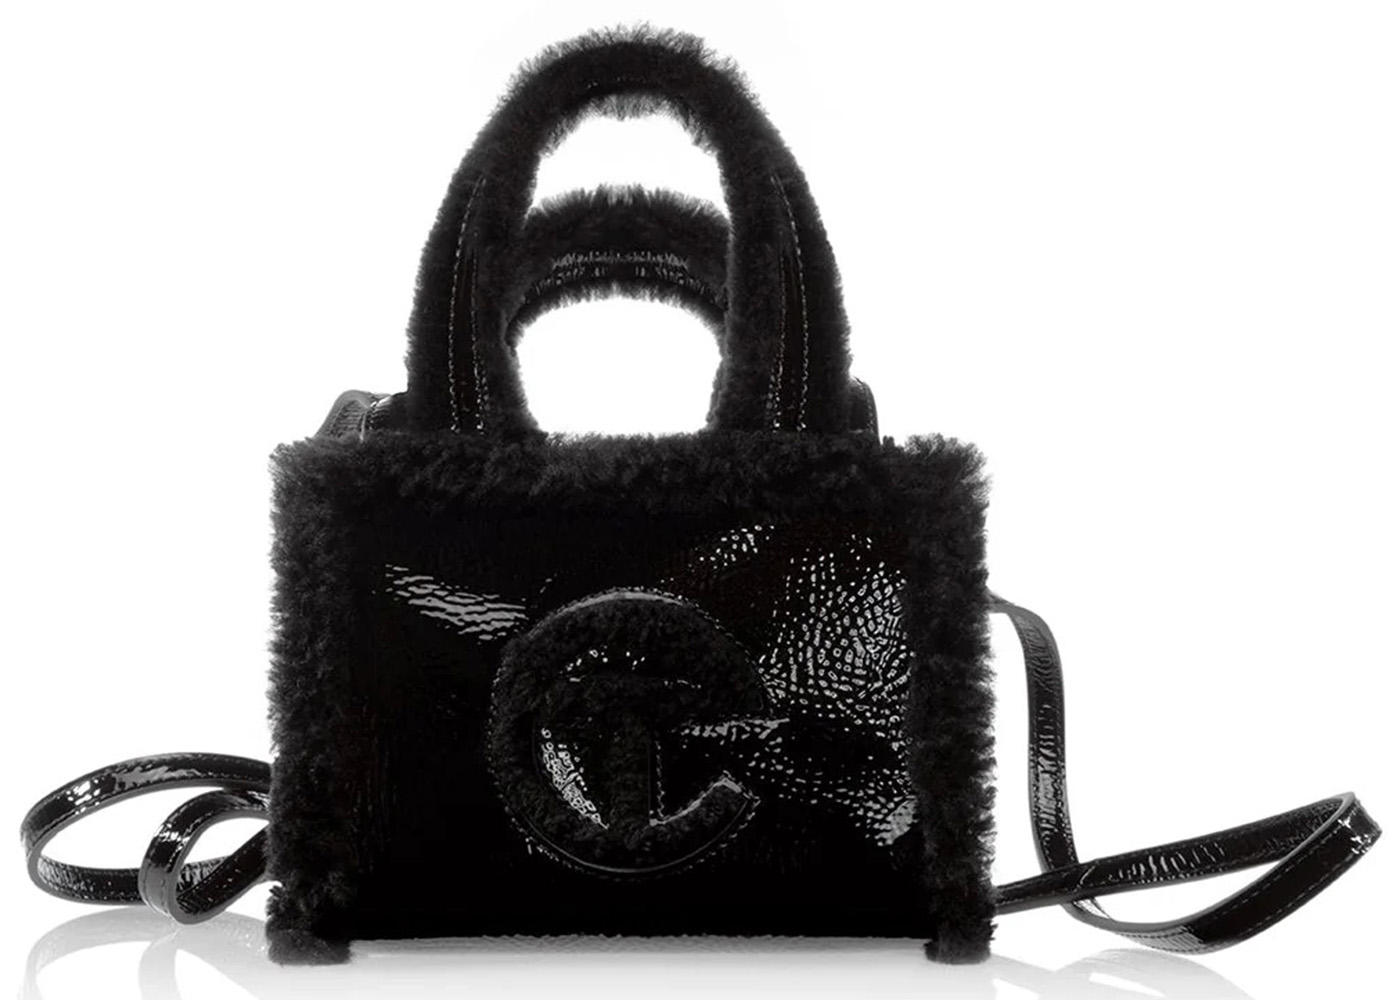 Telfar x UGG Small Shopper Crinkle Black in Crinkle Patent Leather ...